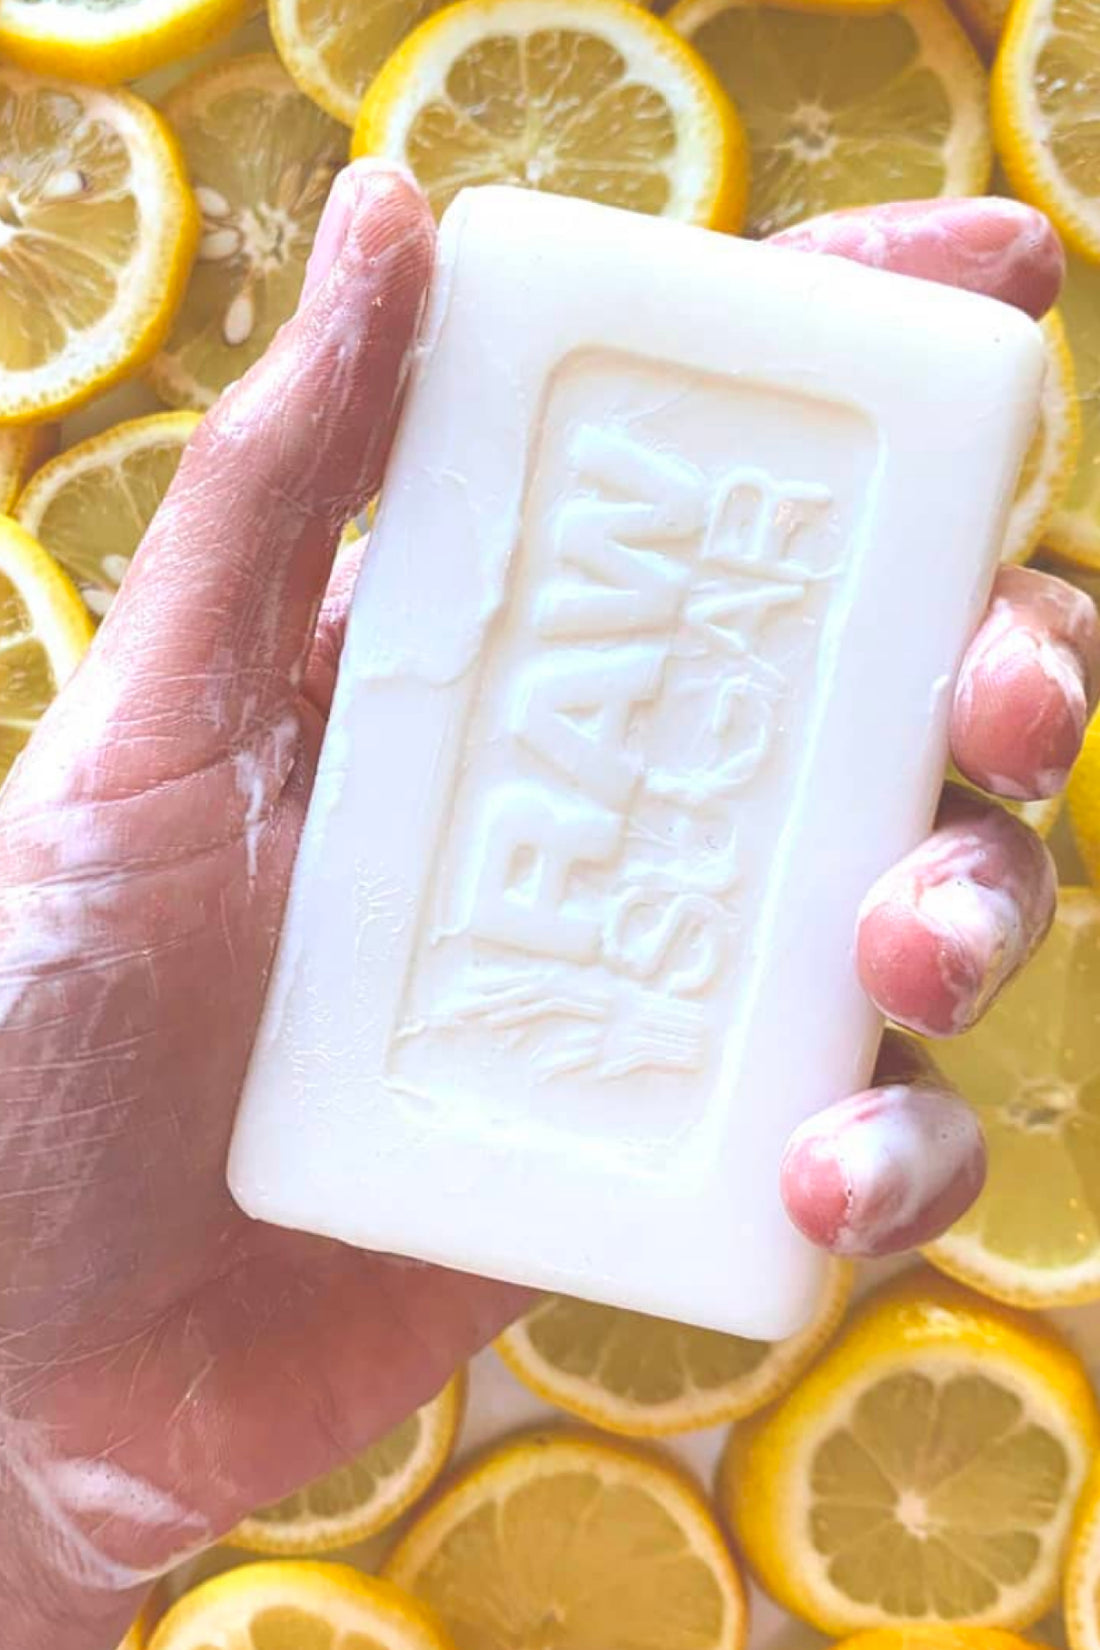 Vanilla Orange Travel Size Bar Soap